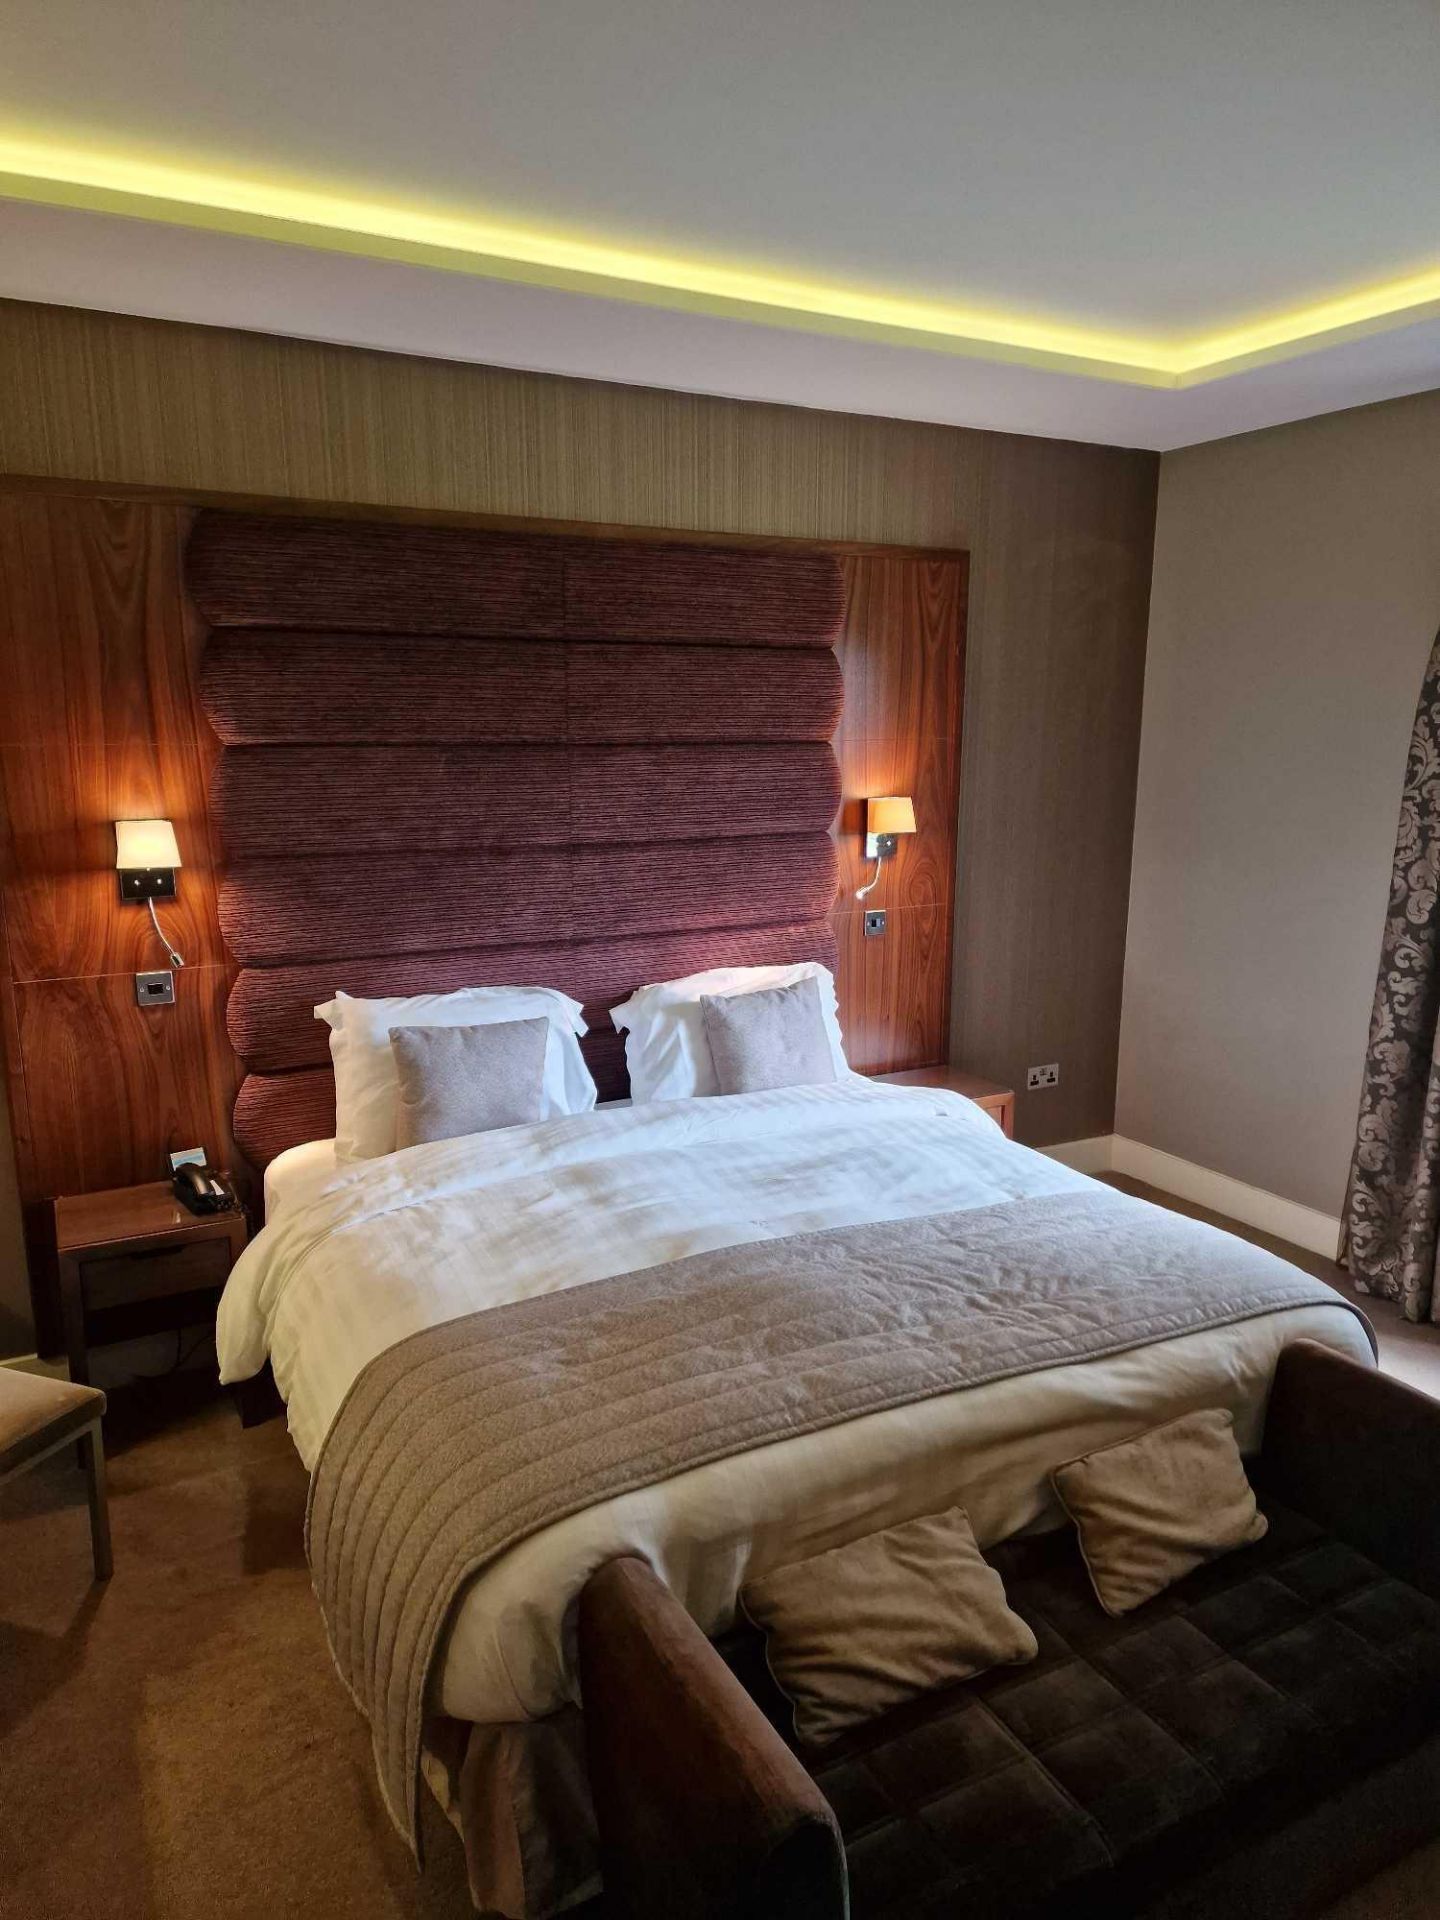 Hypnos Superking 180 x 200cm Zip and Link hotel contract bed comprising of mattress divan base - Bild 4 aus 4